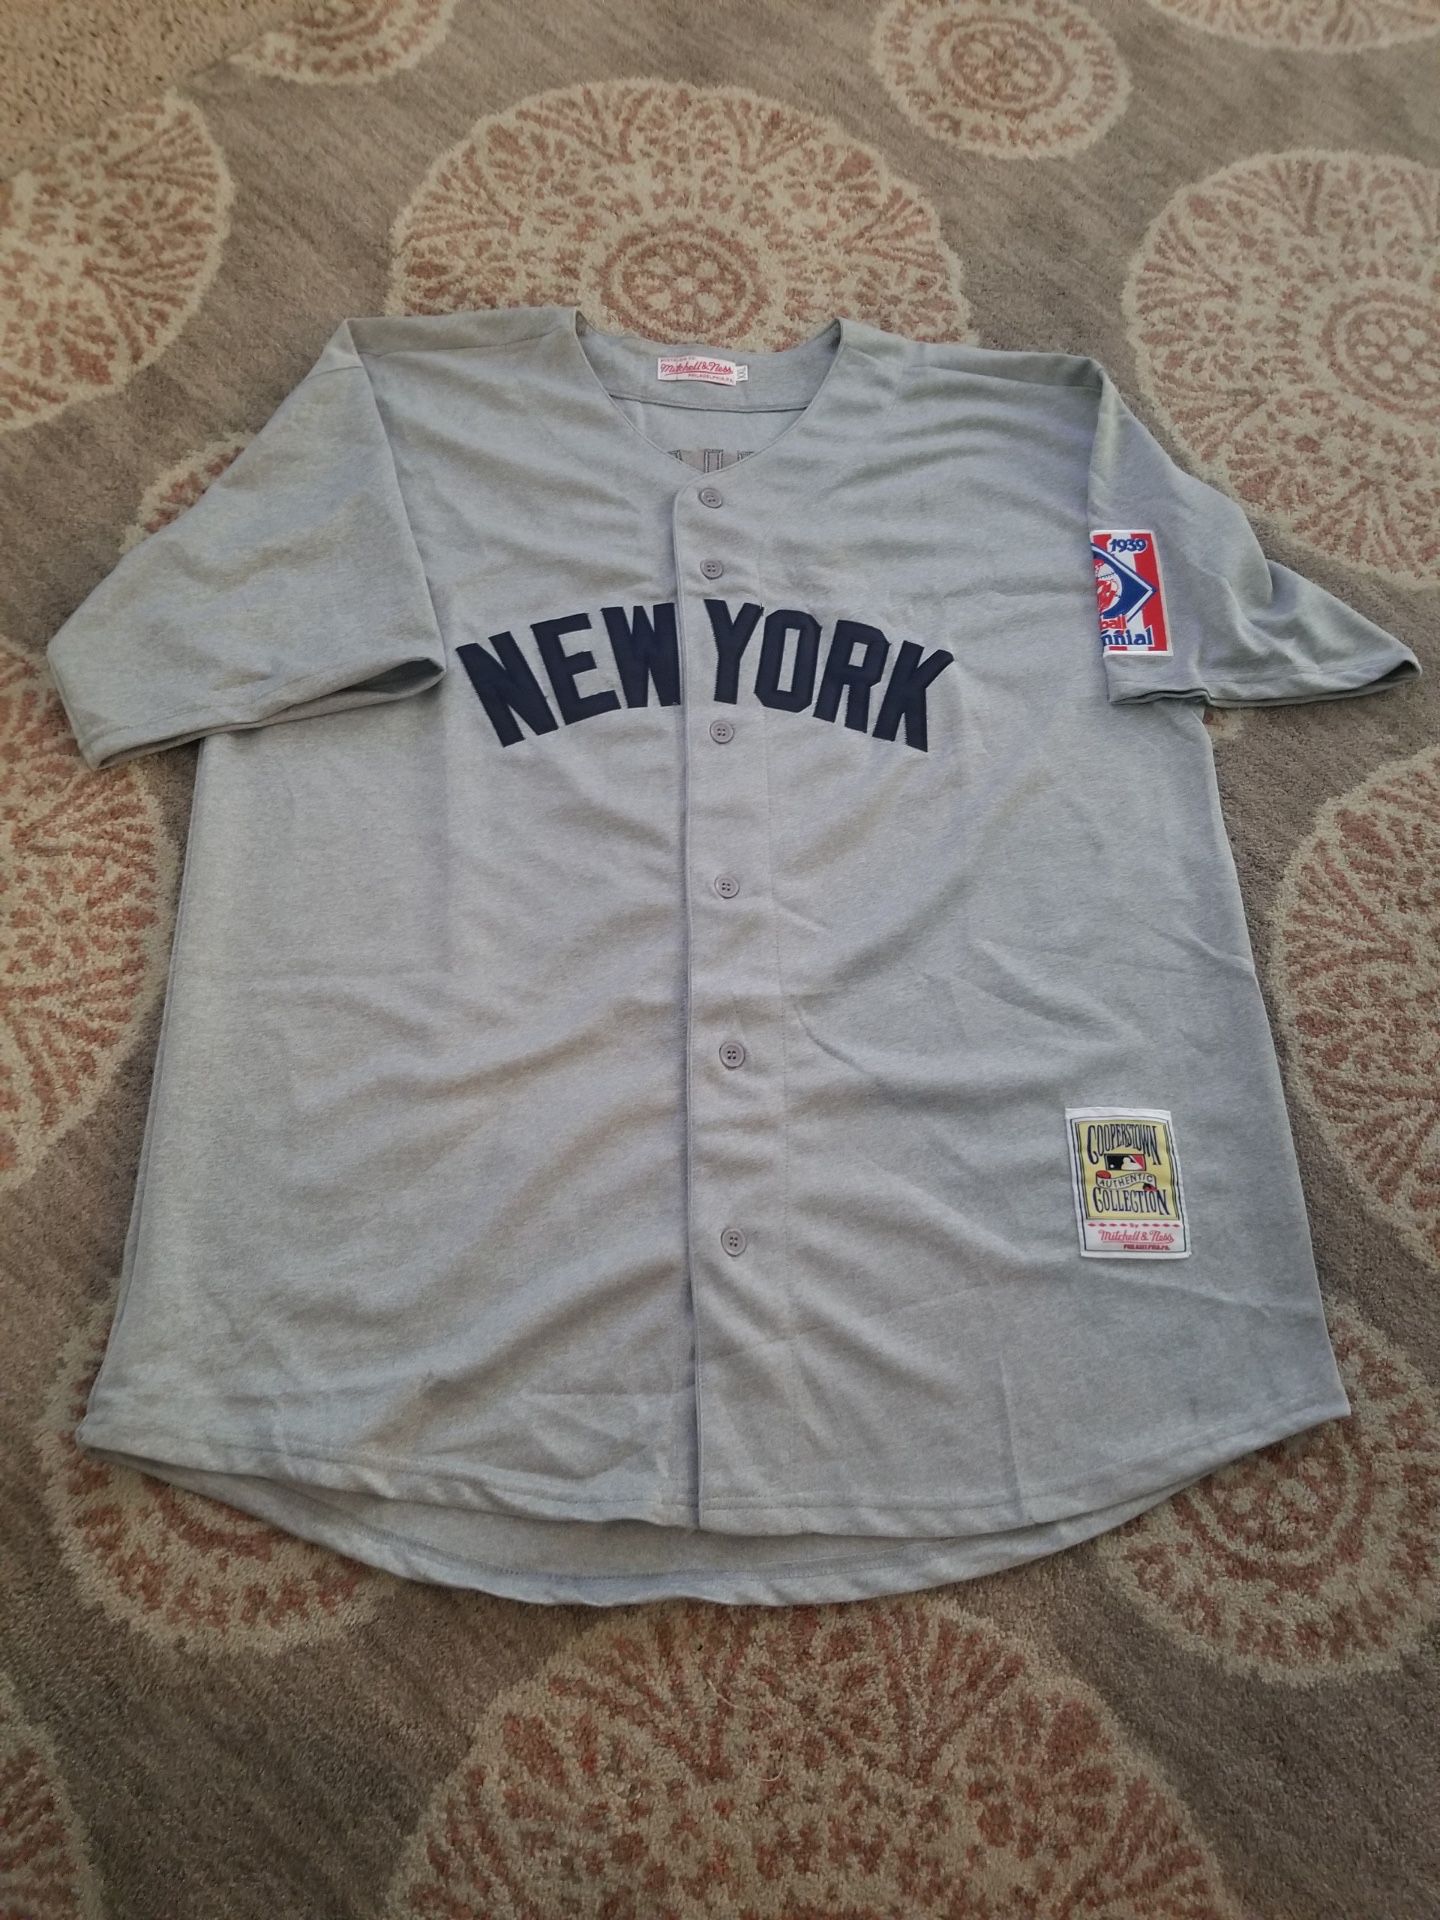 Lou Gehrig jersey